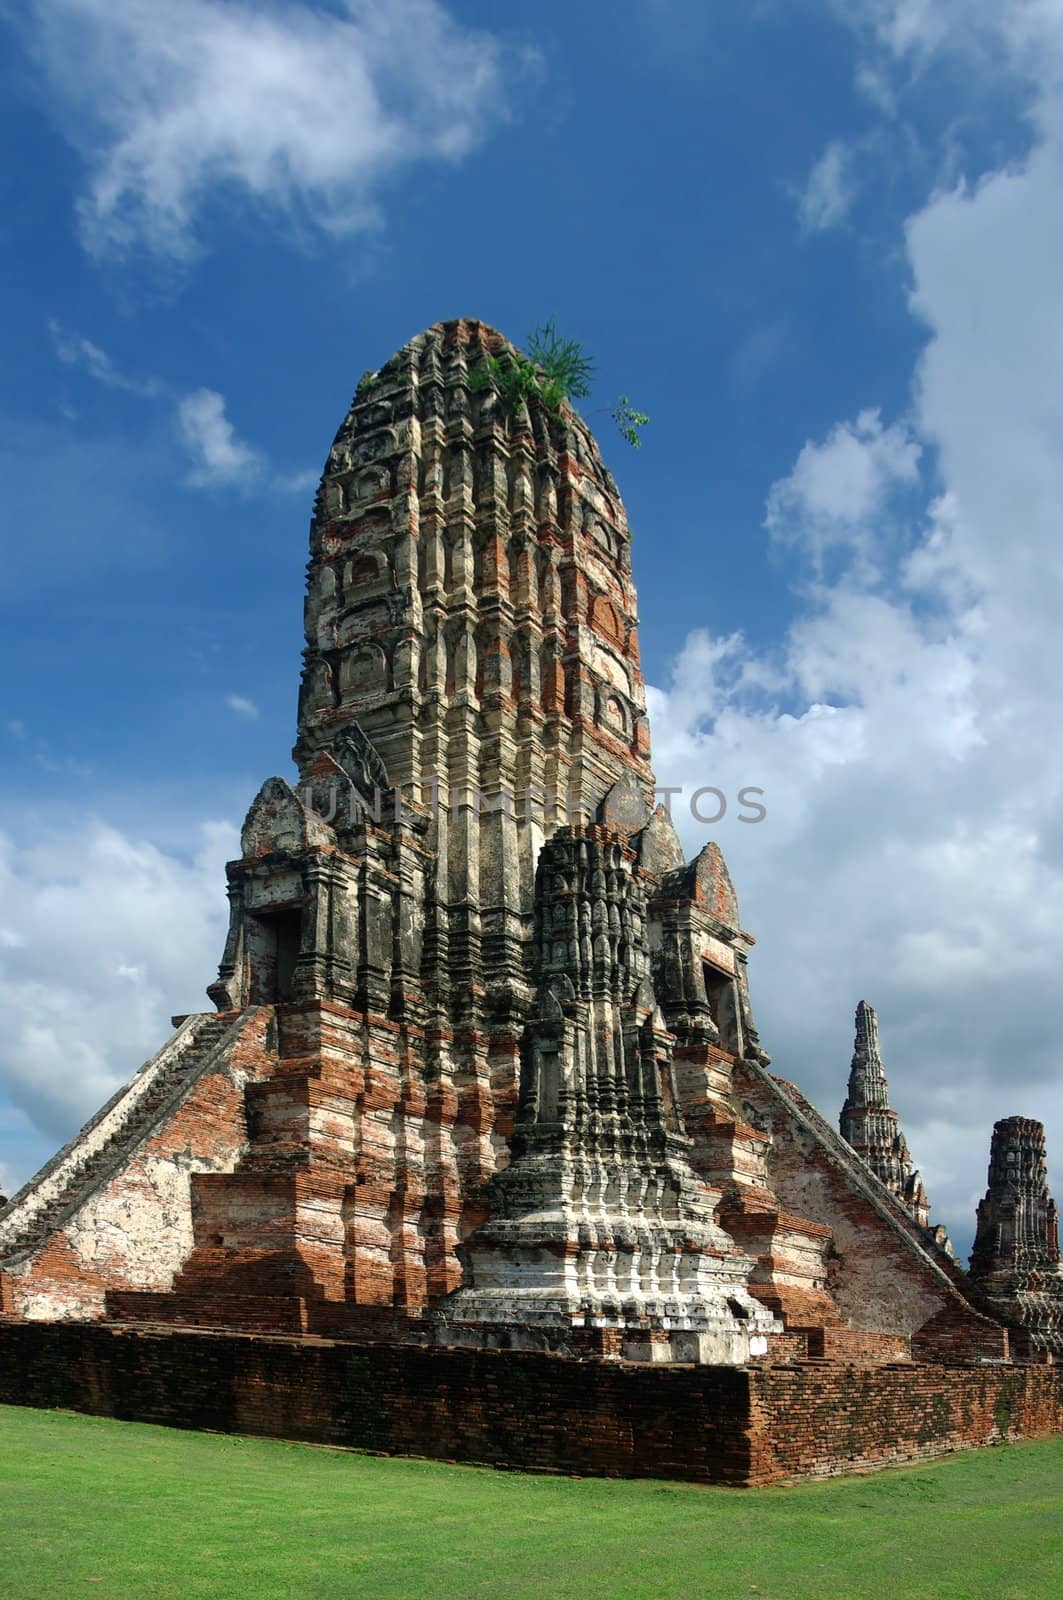 The Buddhist temple of Wat Chaiwatthanaram in the city of Ayutthaya, Thailand